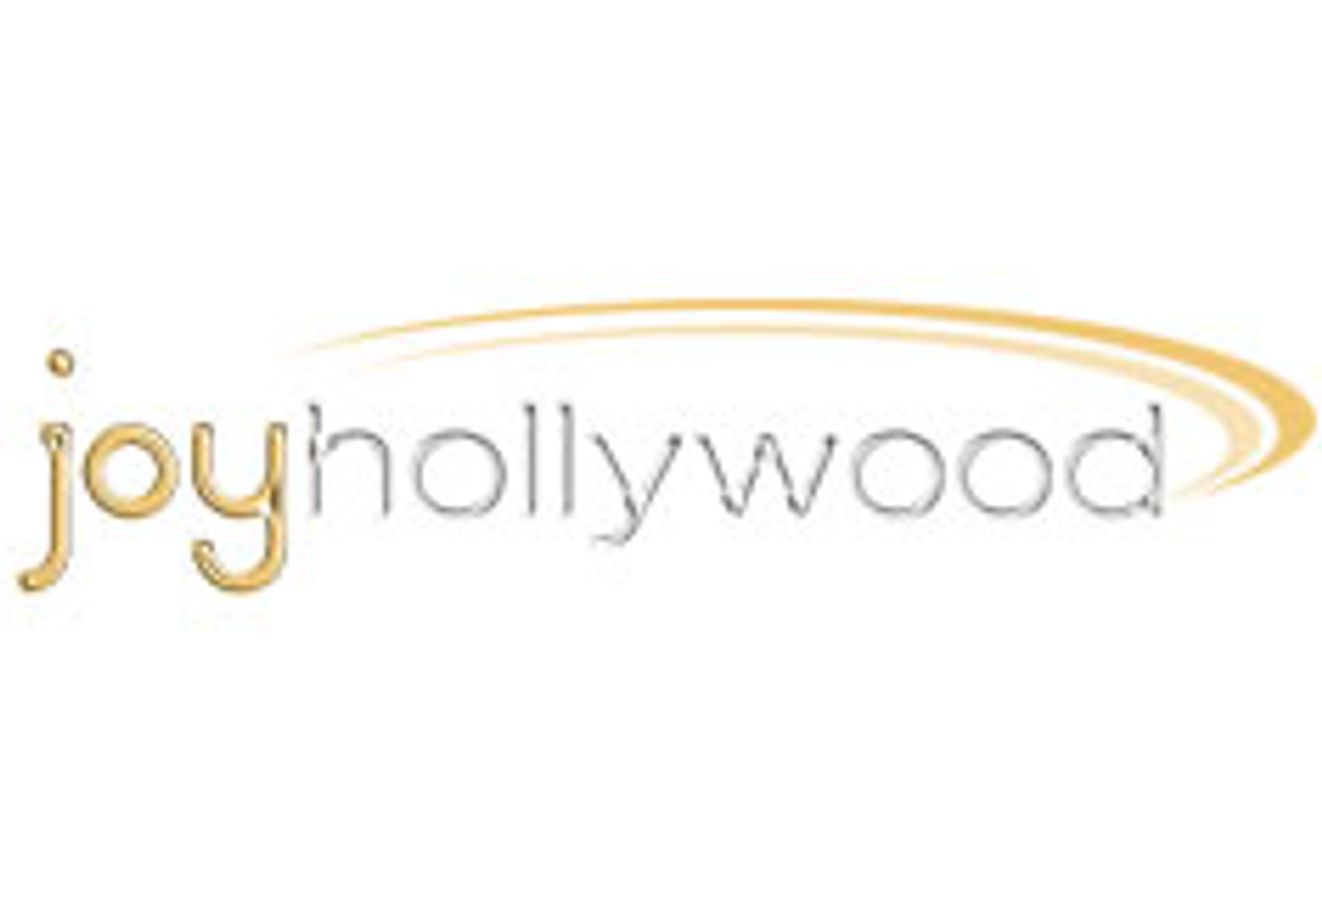 Joy Hollywood